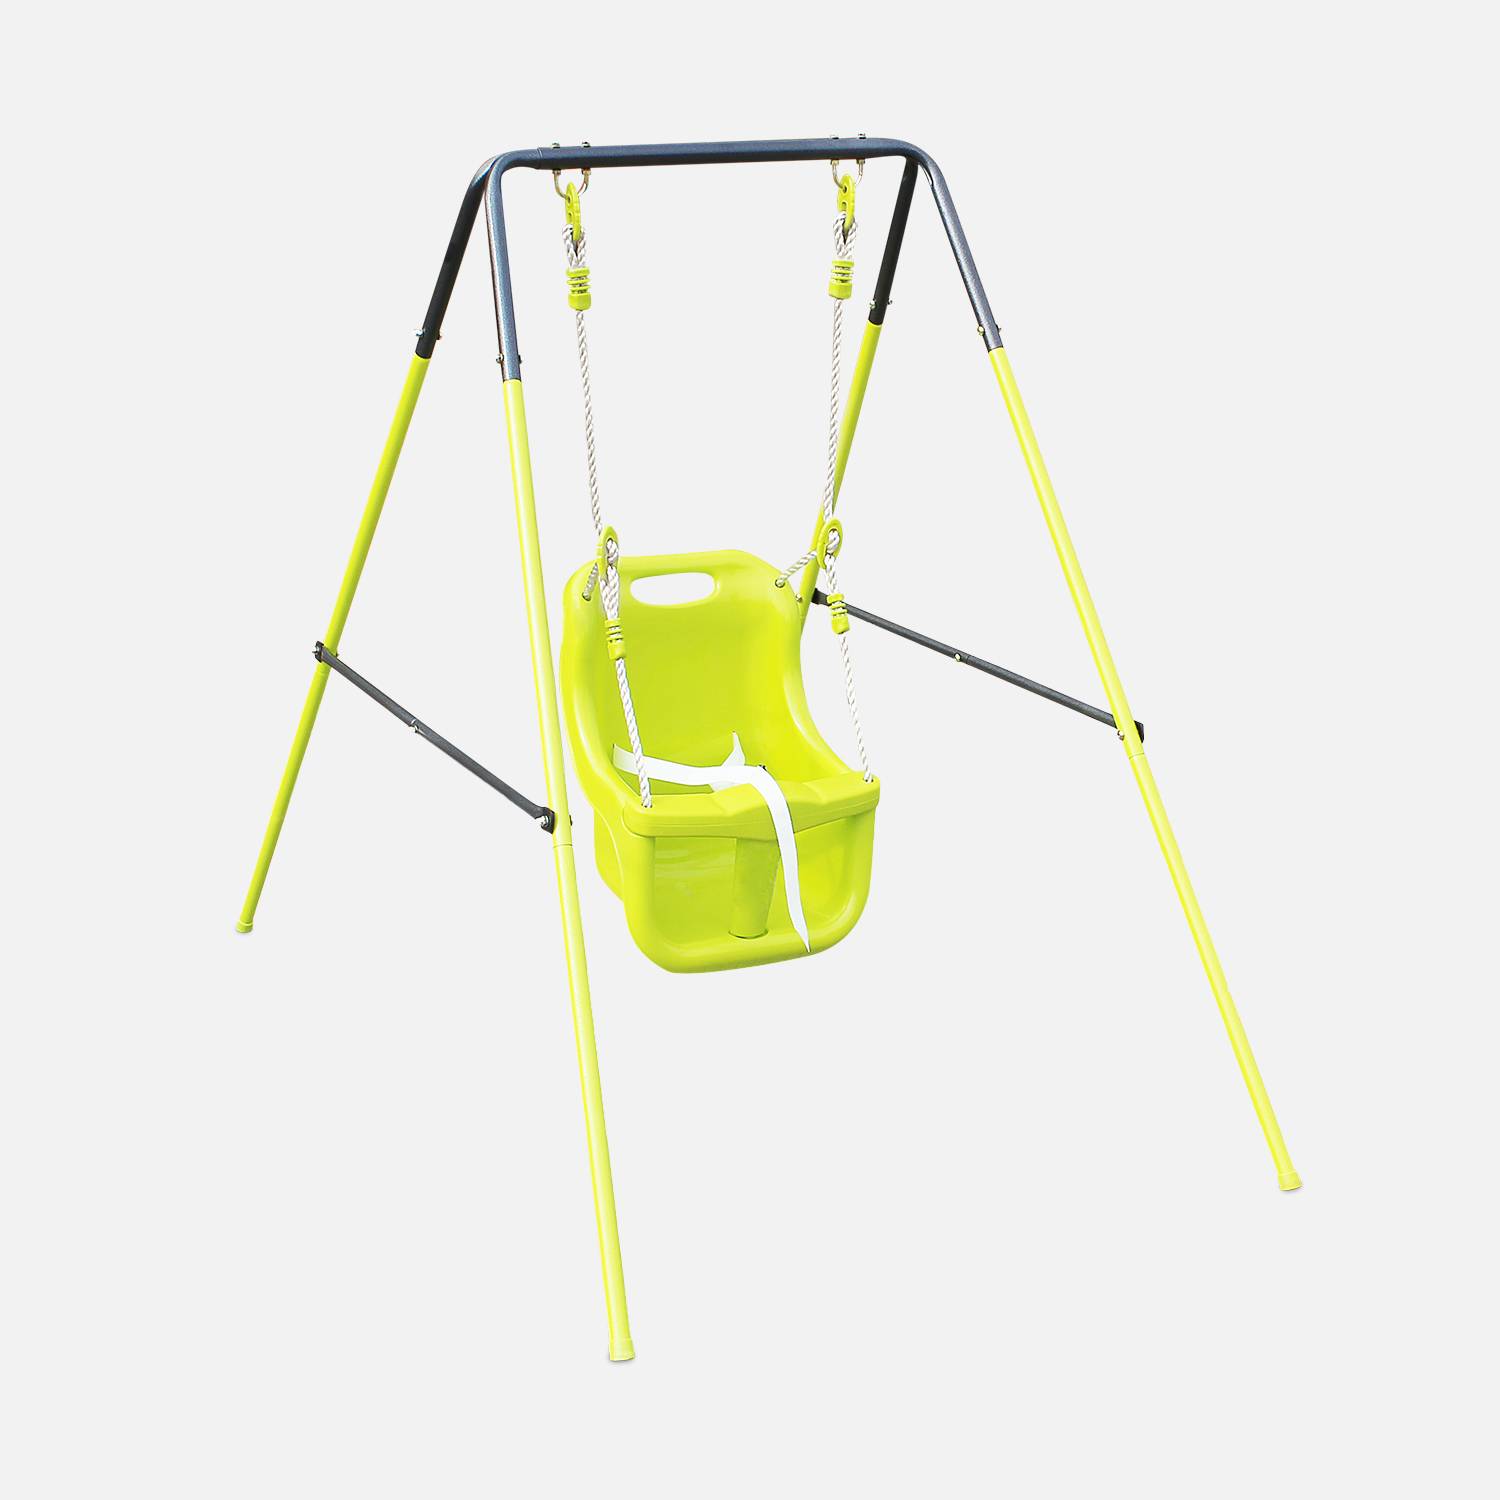 Toddler and kids garden swing, 97x147x118cm, Farou, Metal frame, Plastic seat, Green,sweeek,Photo1